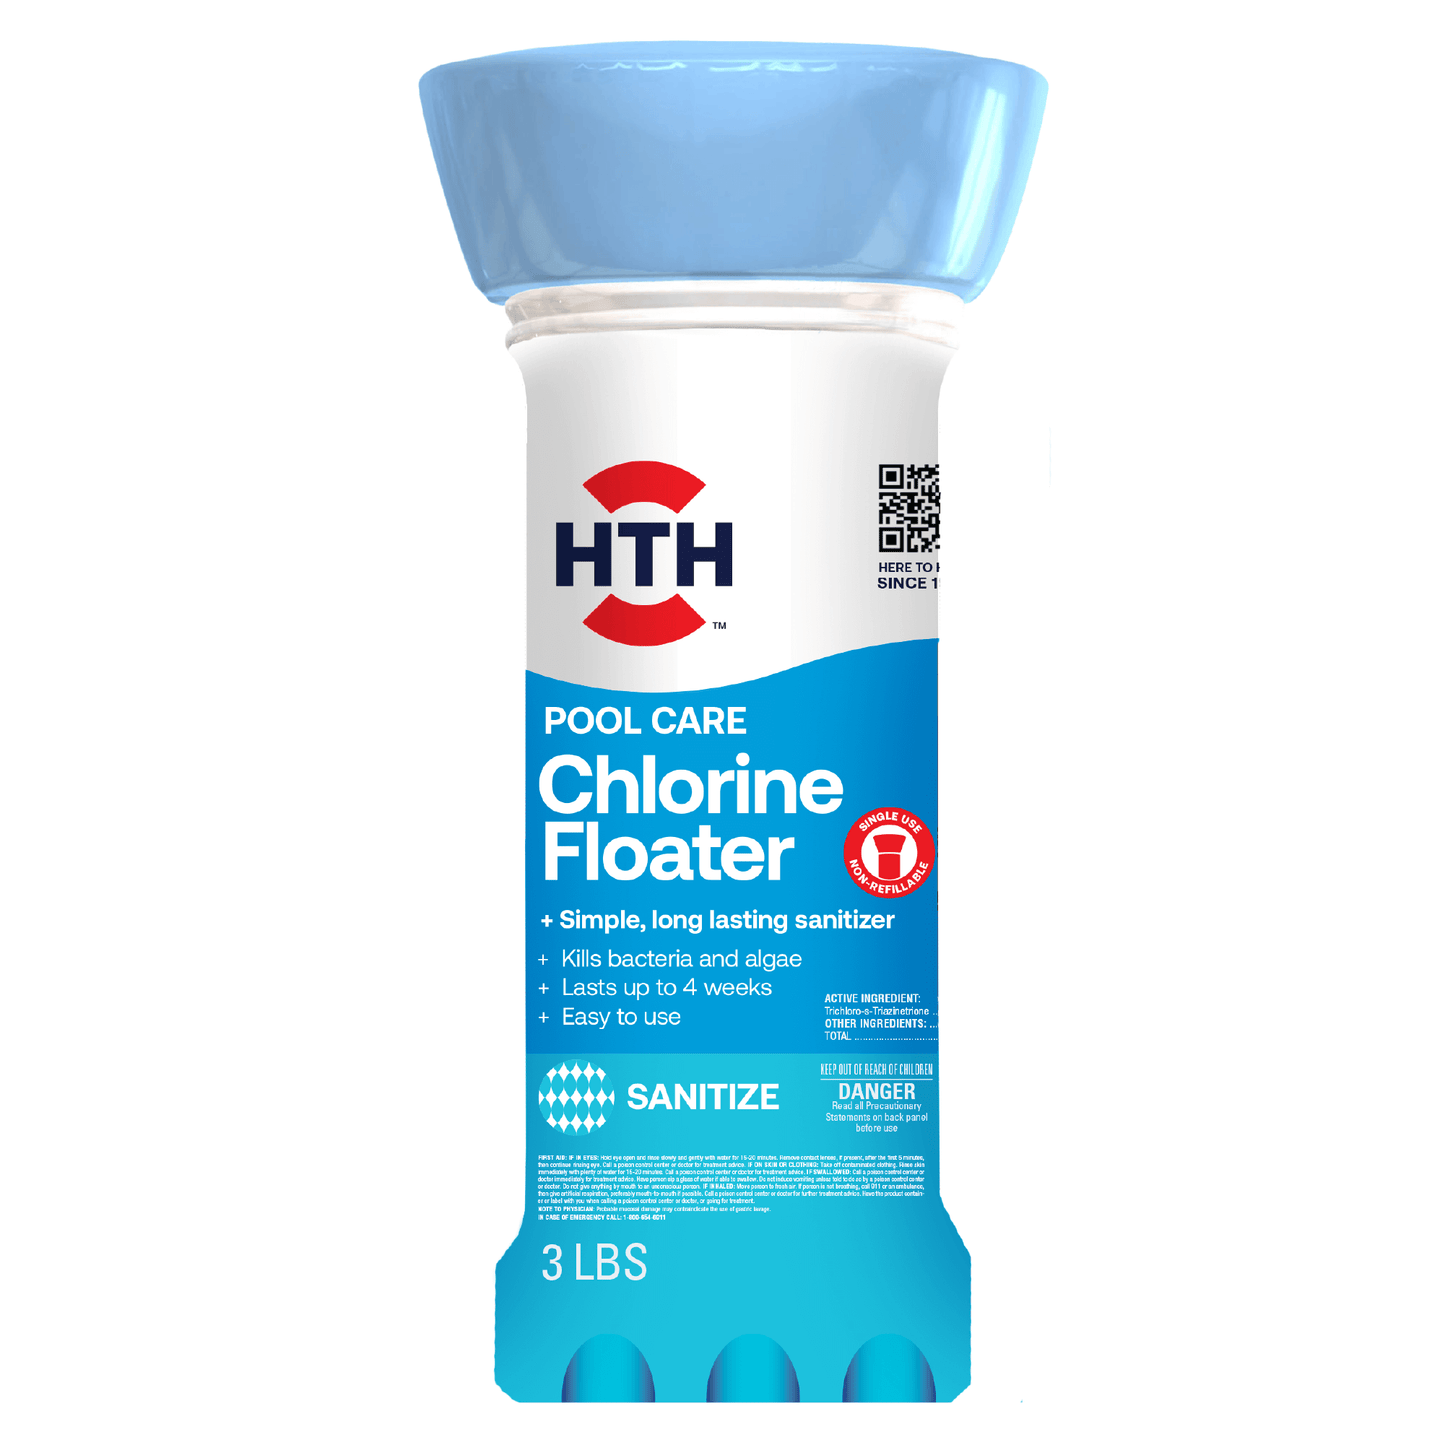 HTH™ Pool Care Chlorine Floater: Pool Chlorine Floater